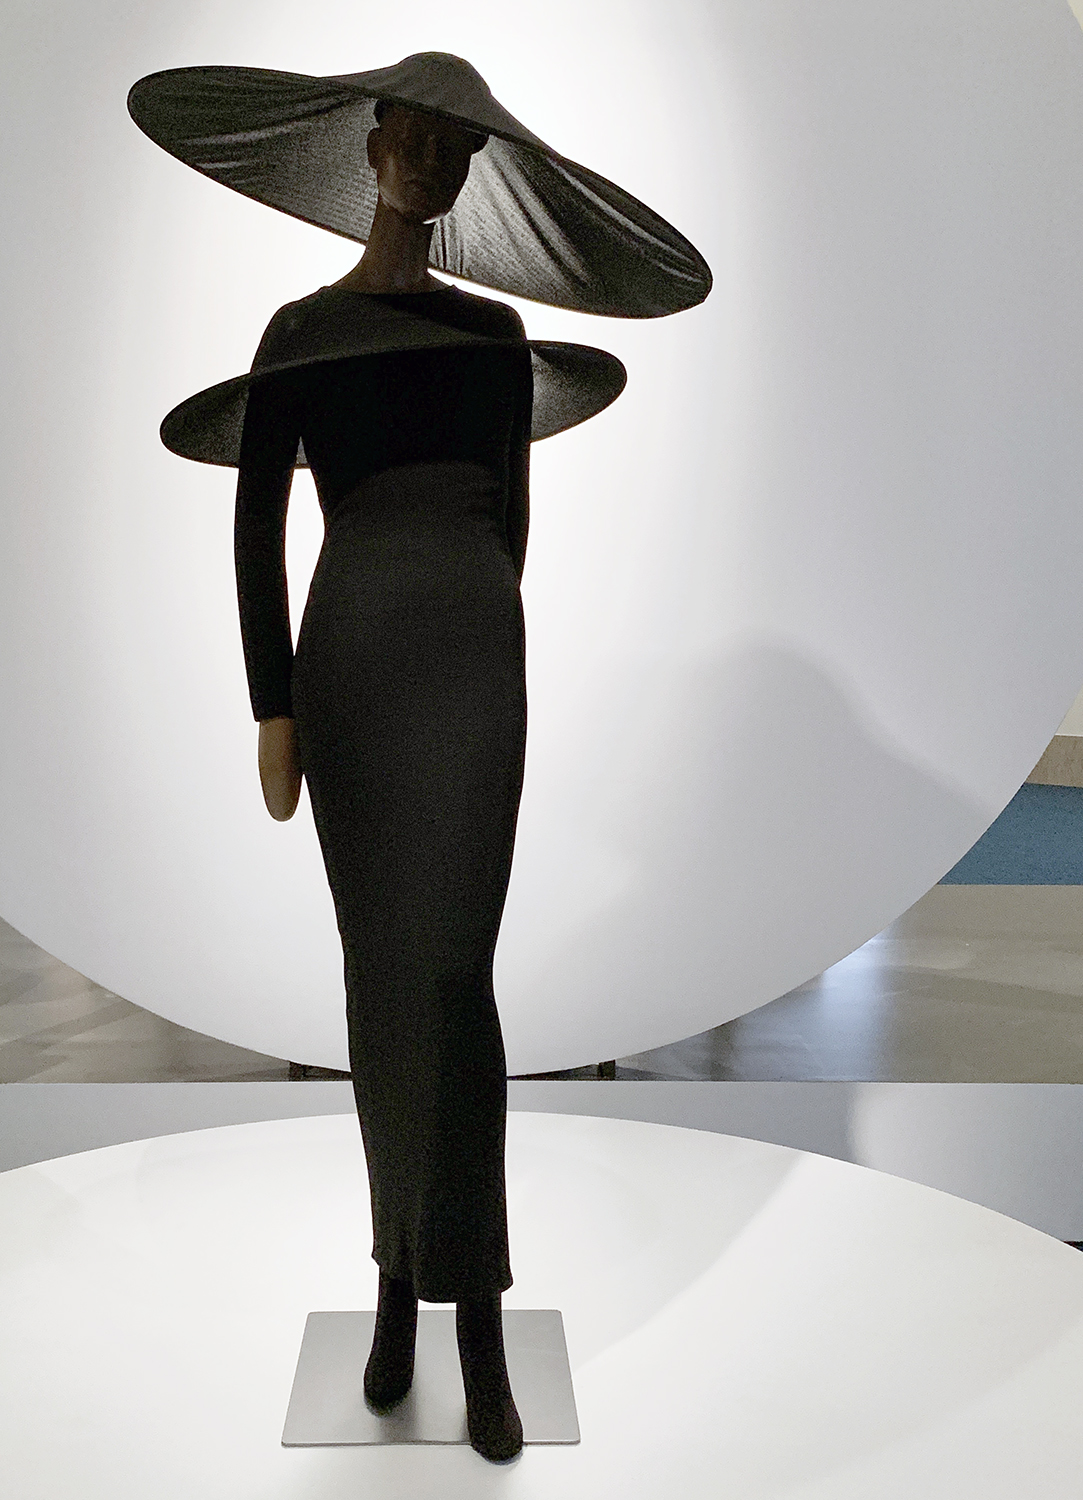 Pierre Cardin: Future Fashion” Brings Space-Age French Design to Brooklyn -  Interior Design